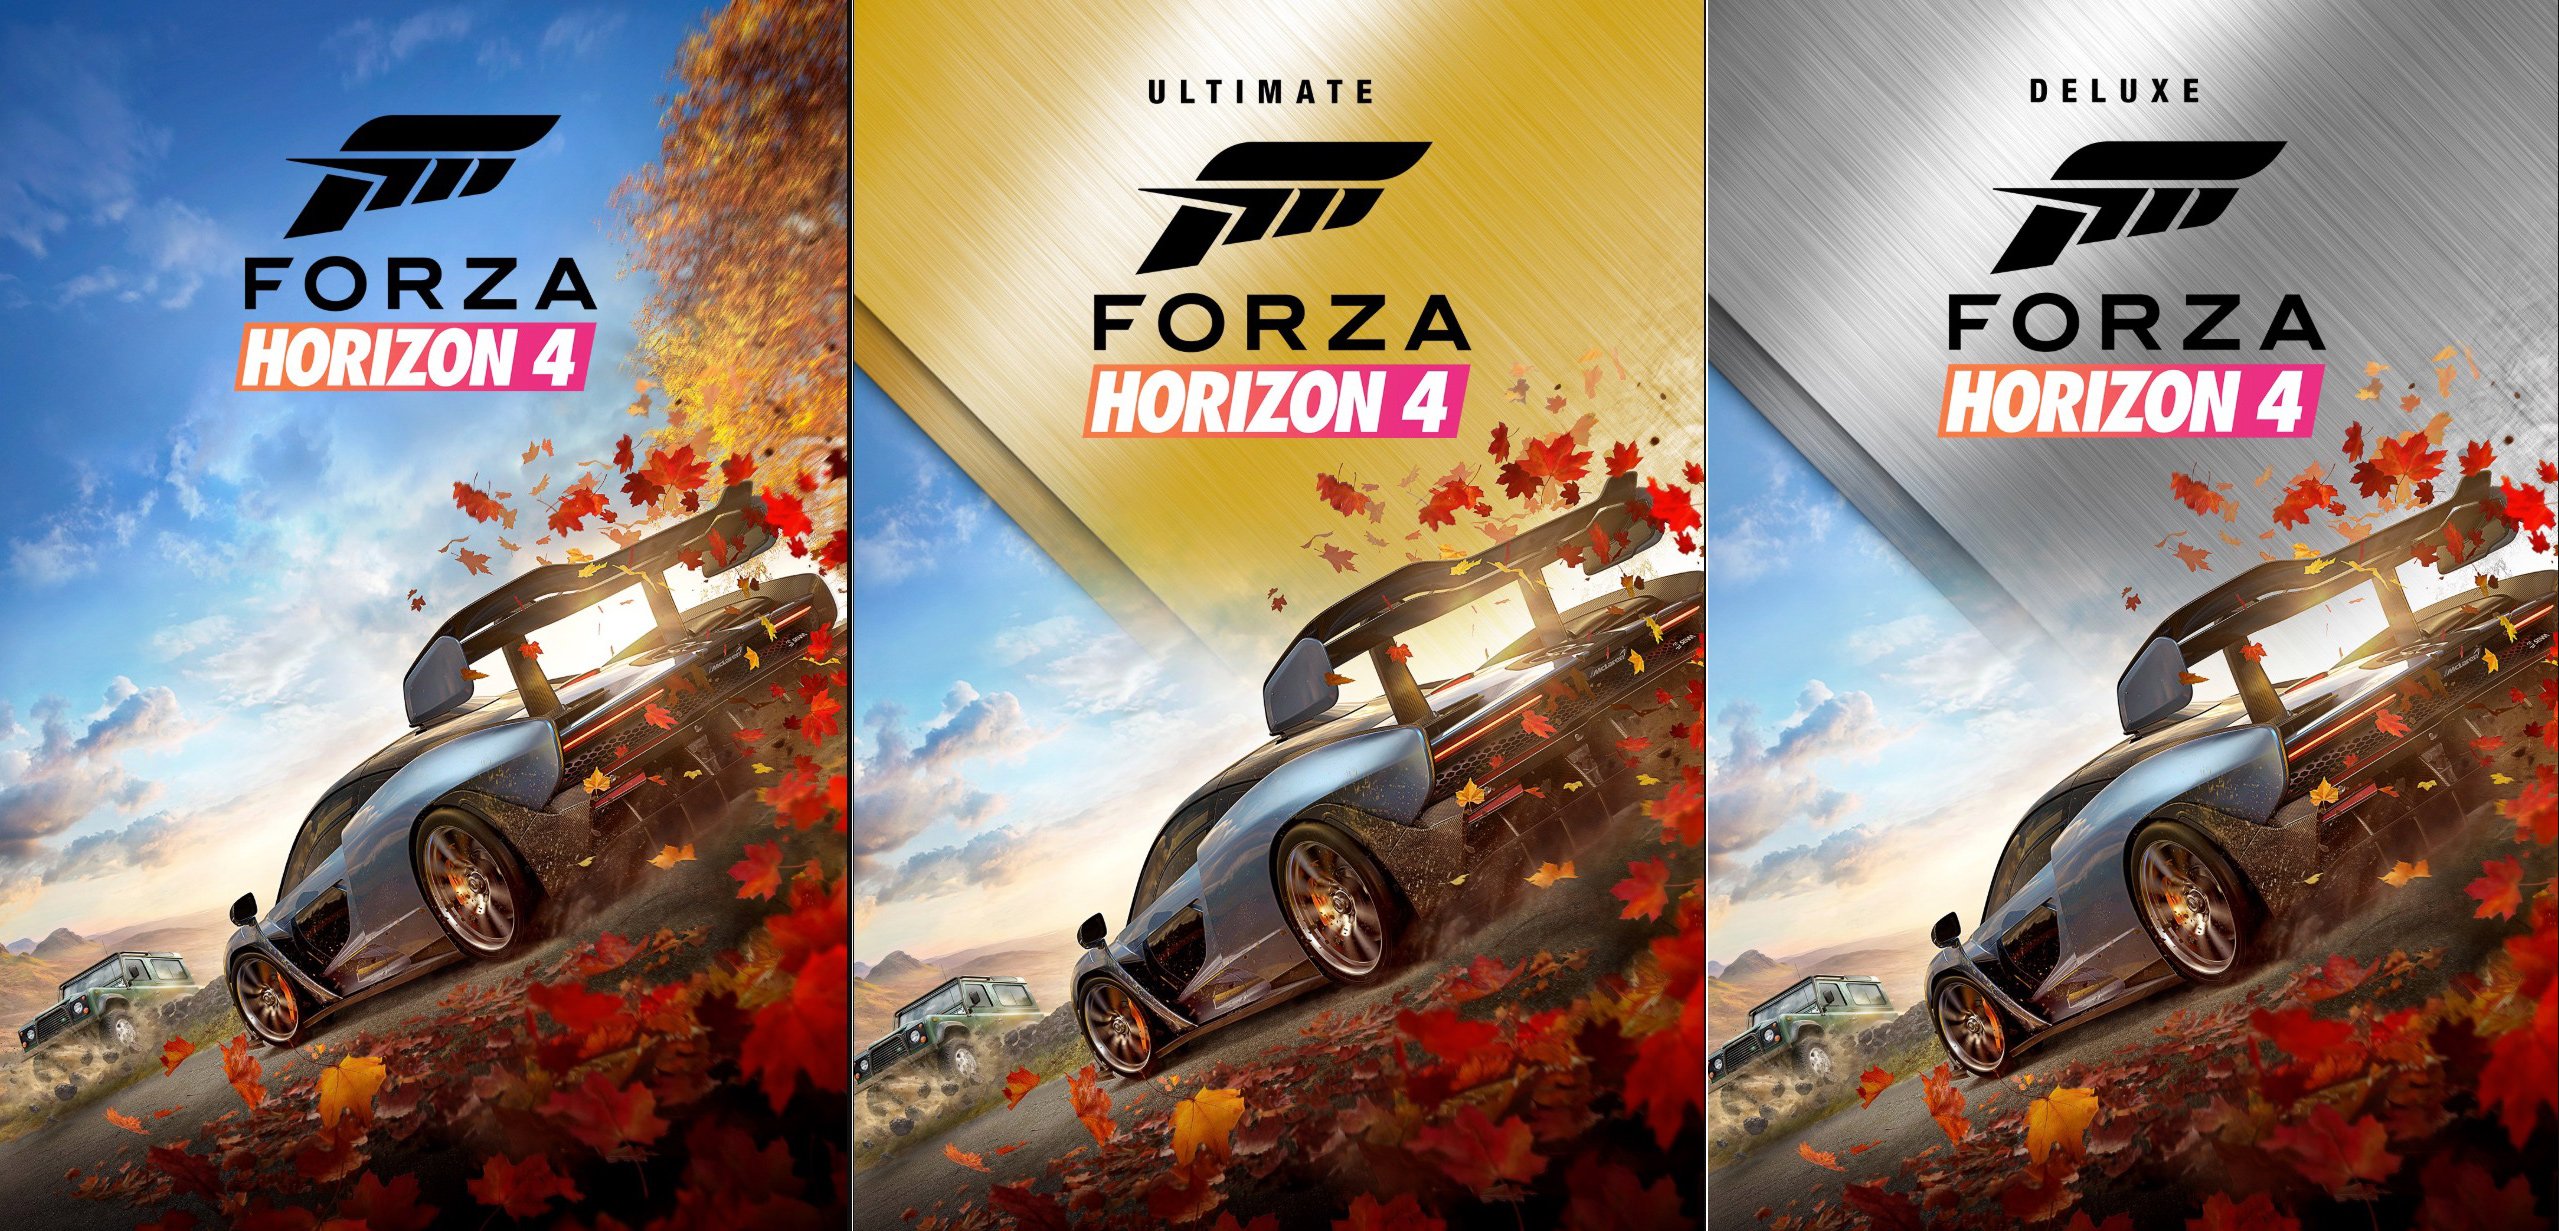 Windswept bringe handlingen Forord Which Forza Horizon 4 Edition Should I Buy?